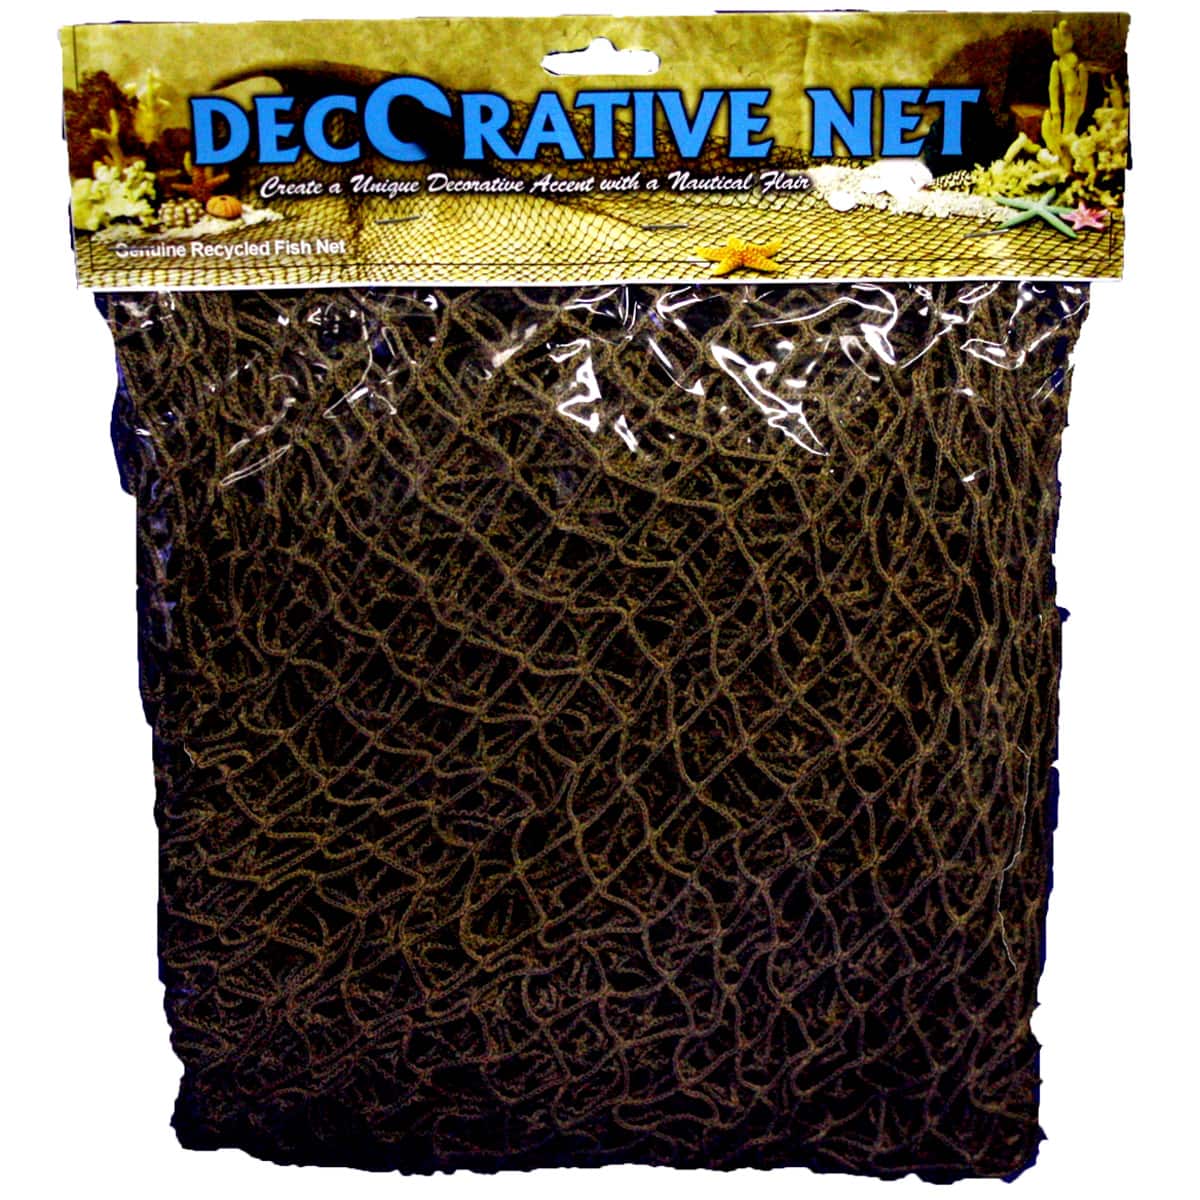 Fish Net Decor, 2 Pack Decorative Fishing Nets, for Brazil